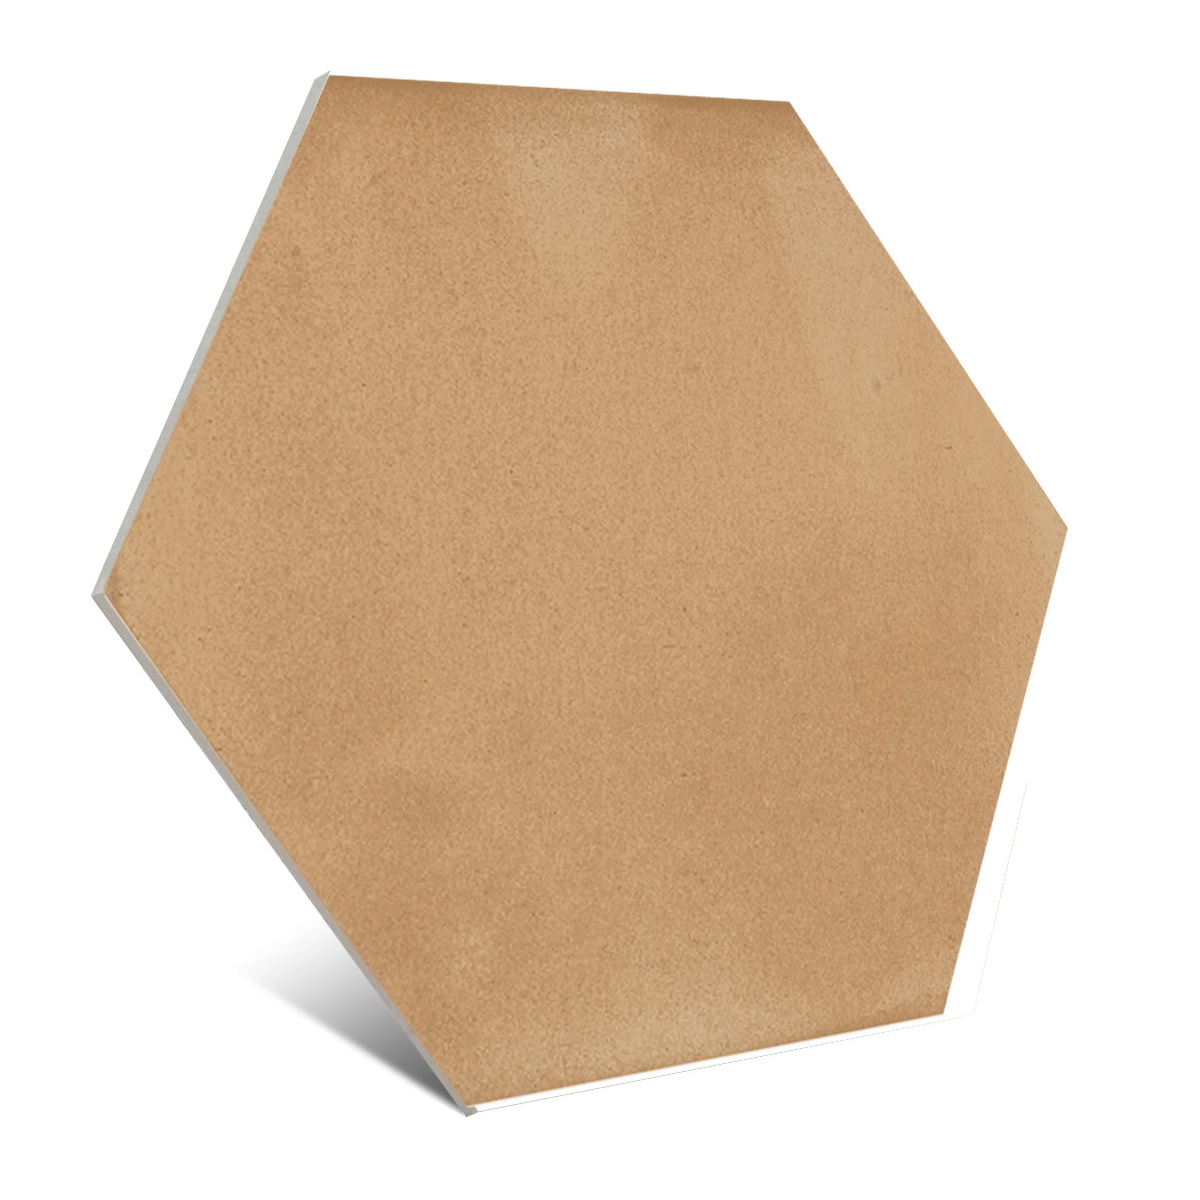 Hexagon-Clay-Straw-25-APE-4